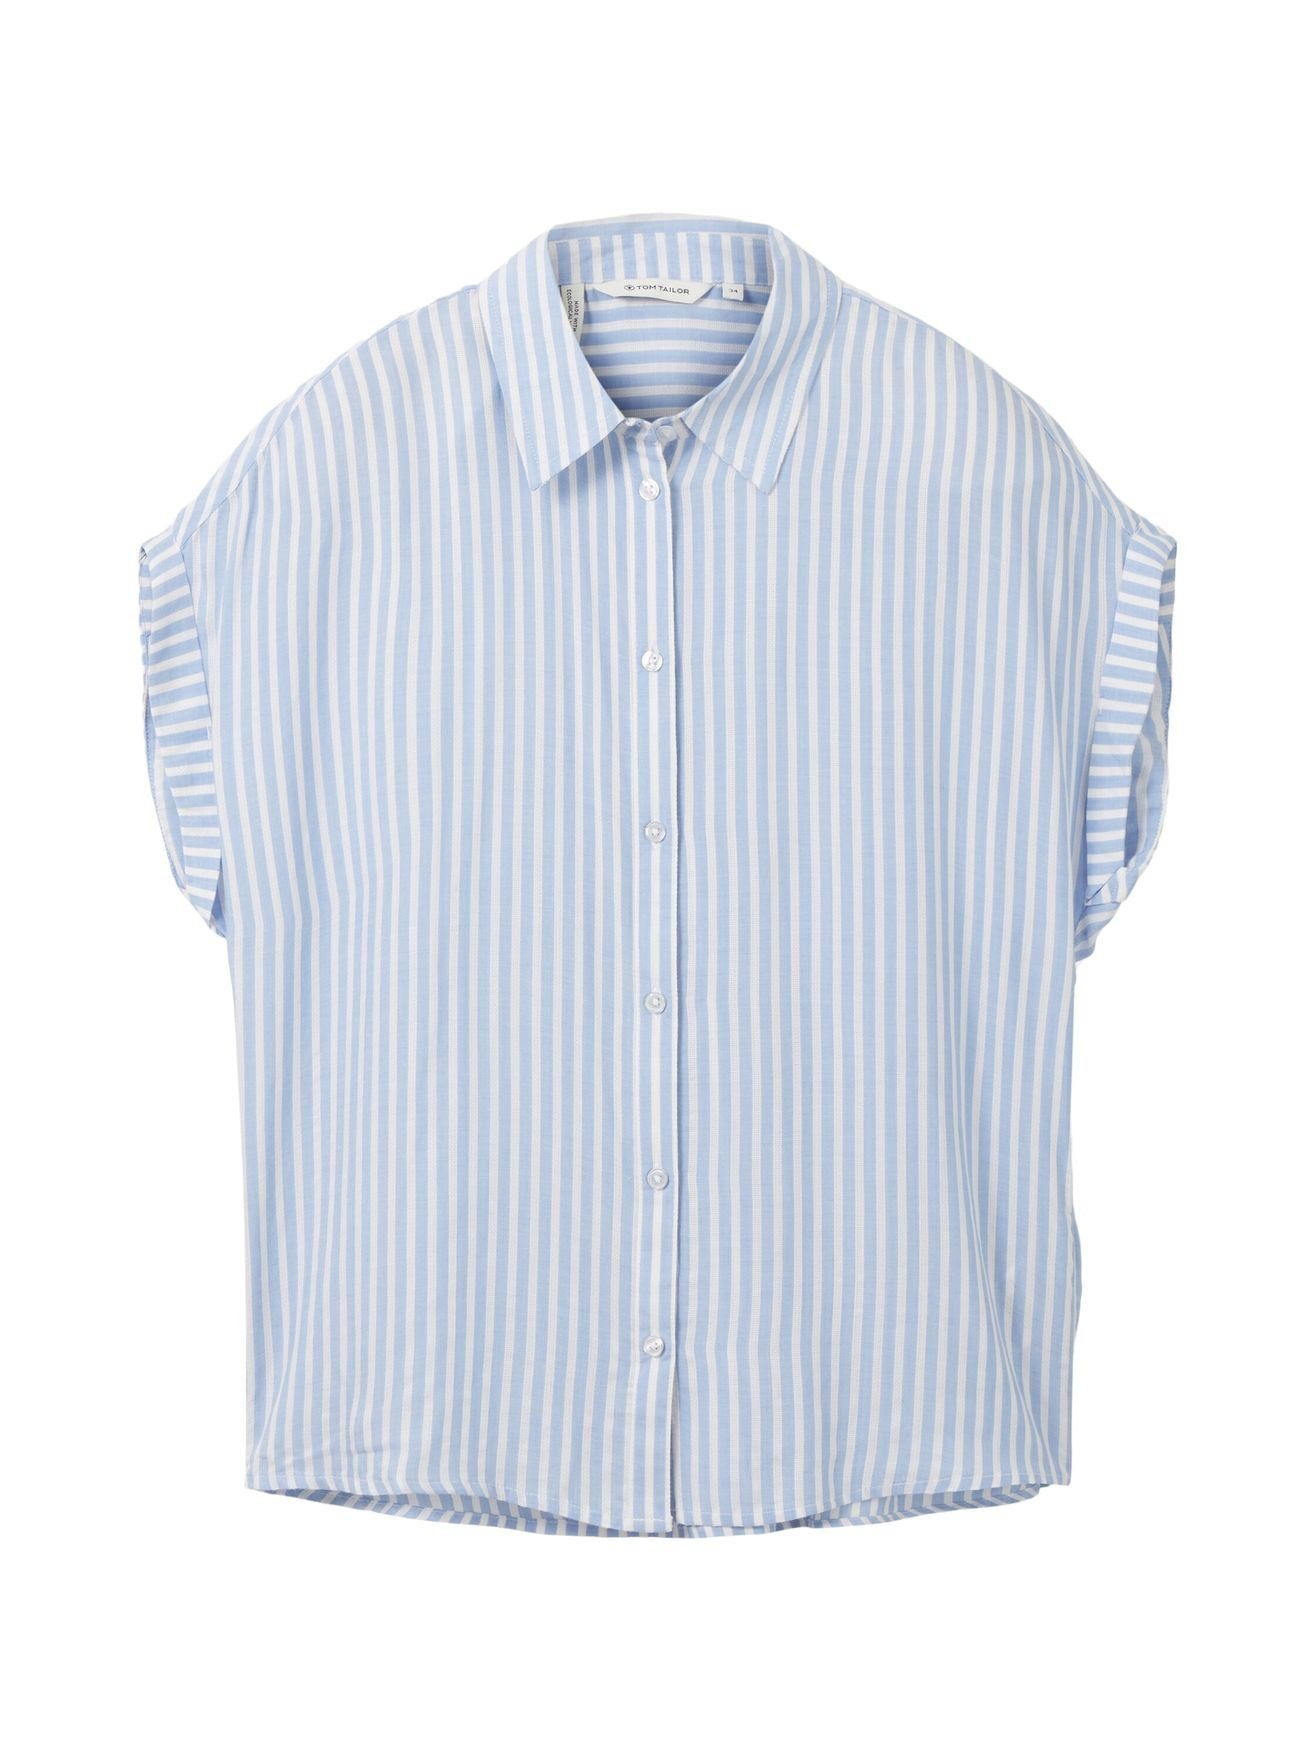 5364 TAILOR Gestreifte Shirt Kurzarm Blusenshirt Blau TOM in Bluse Übergröße